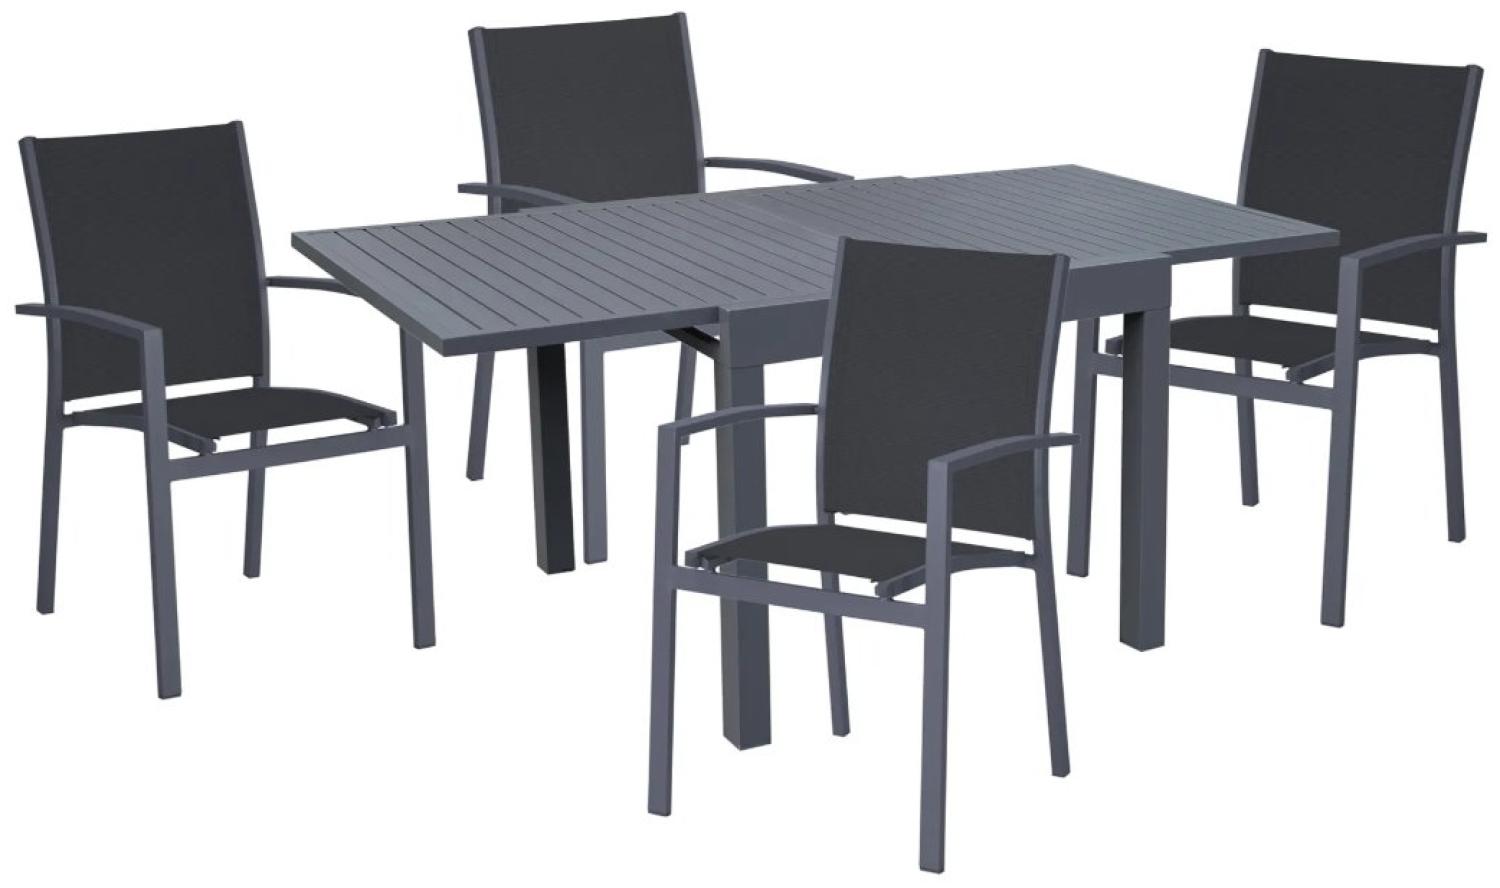 5tlg. Alu Tischgruppe Set Garten Sitzgruppe Tisch Stuhl Stühle Sessel Holz Optik Bild 1